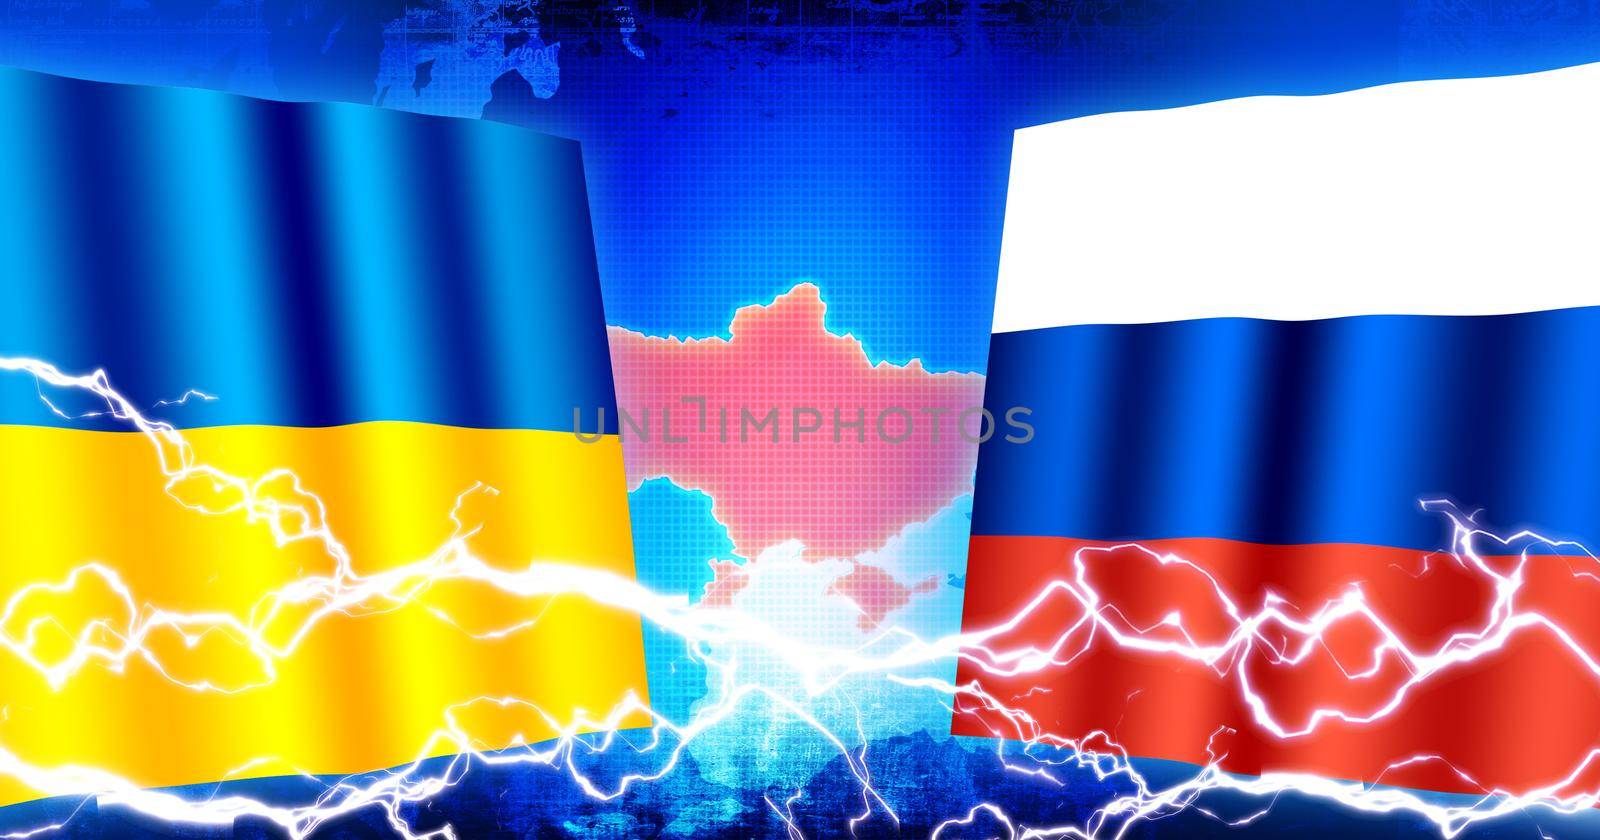 Russia vs Ukraine (War crisis , Political conflict). Web banner illustration